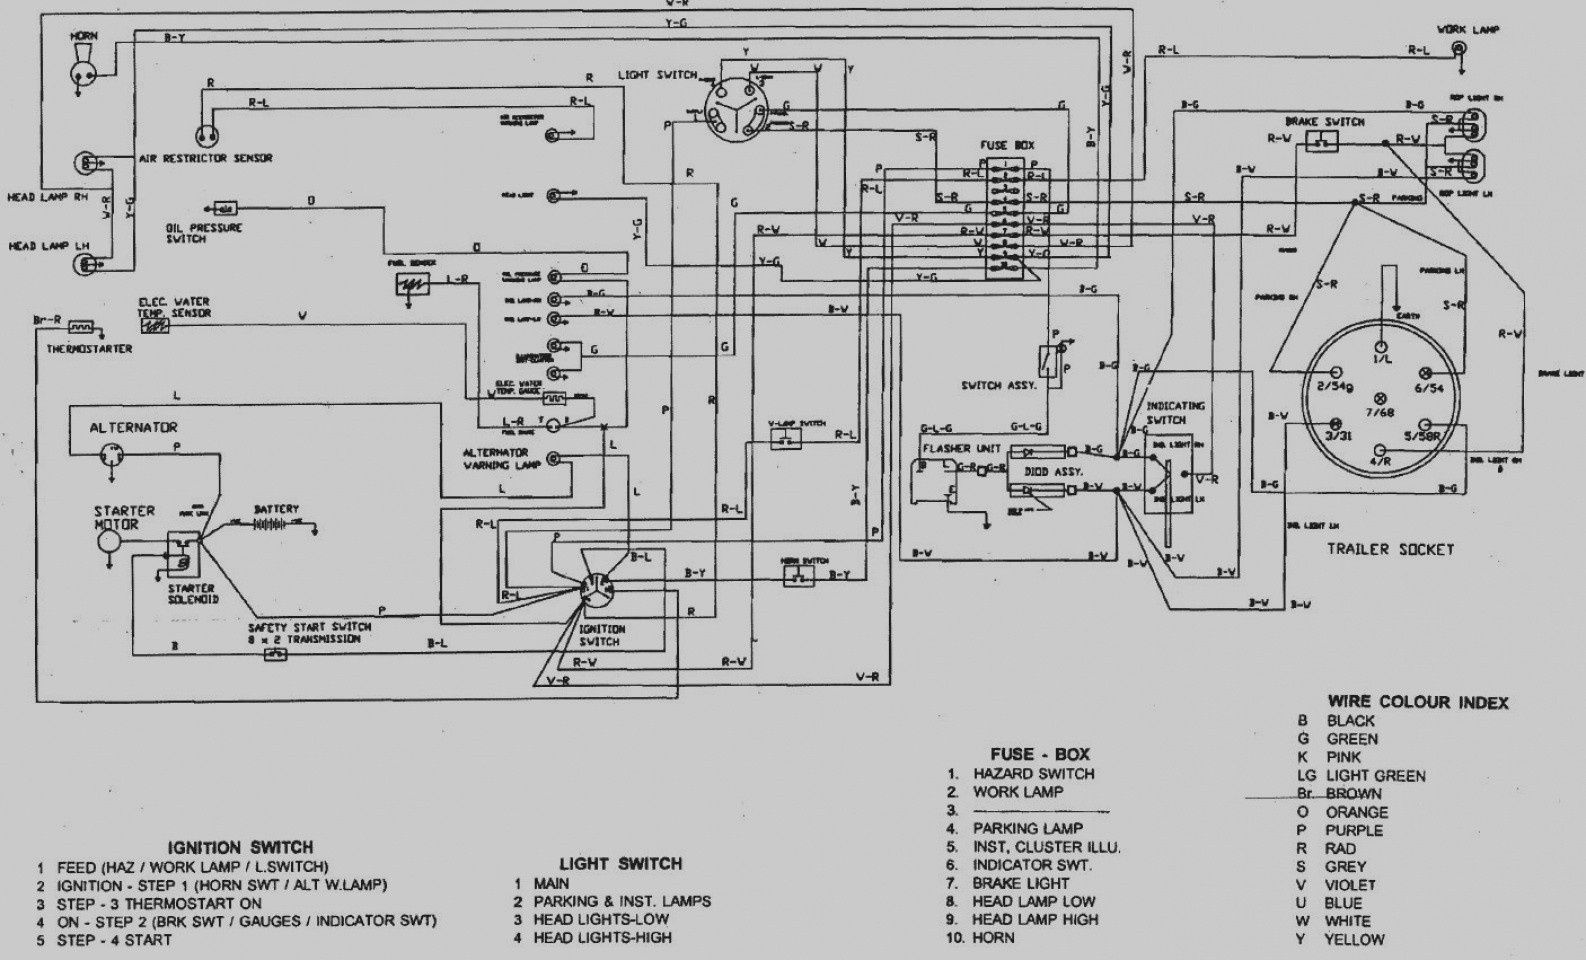 sabre lawn mower wiring diagram electrical wiring diagram software